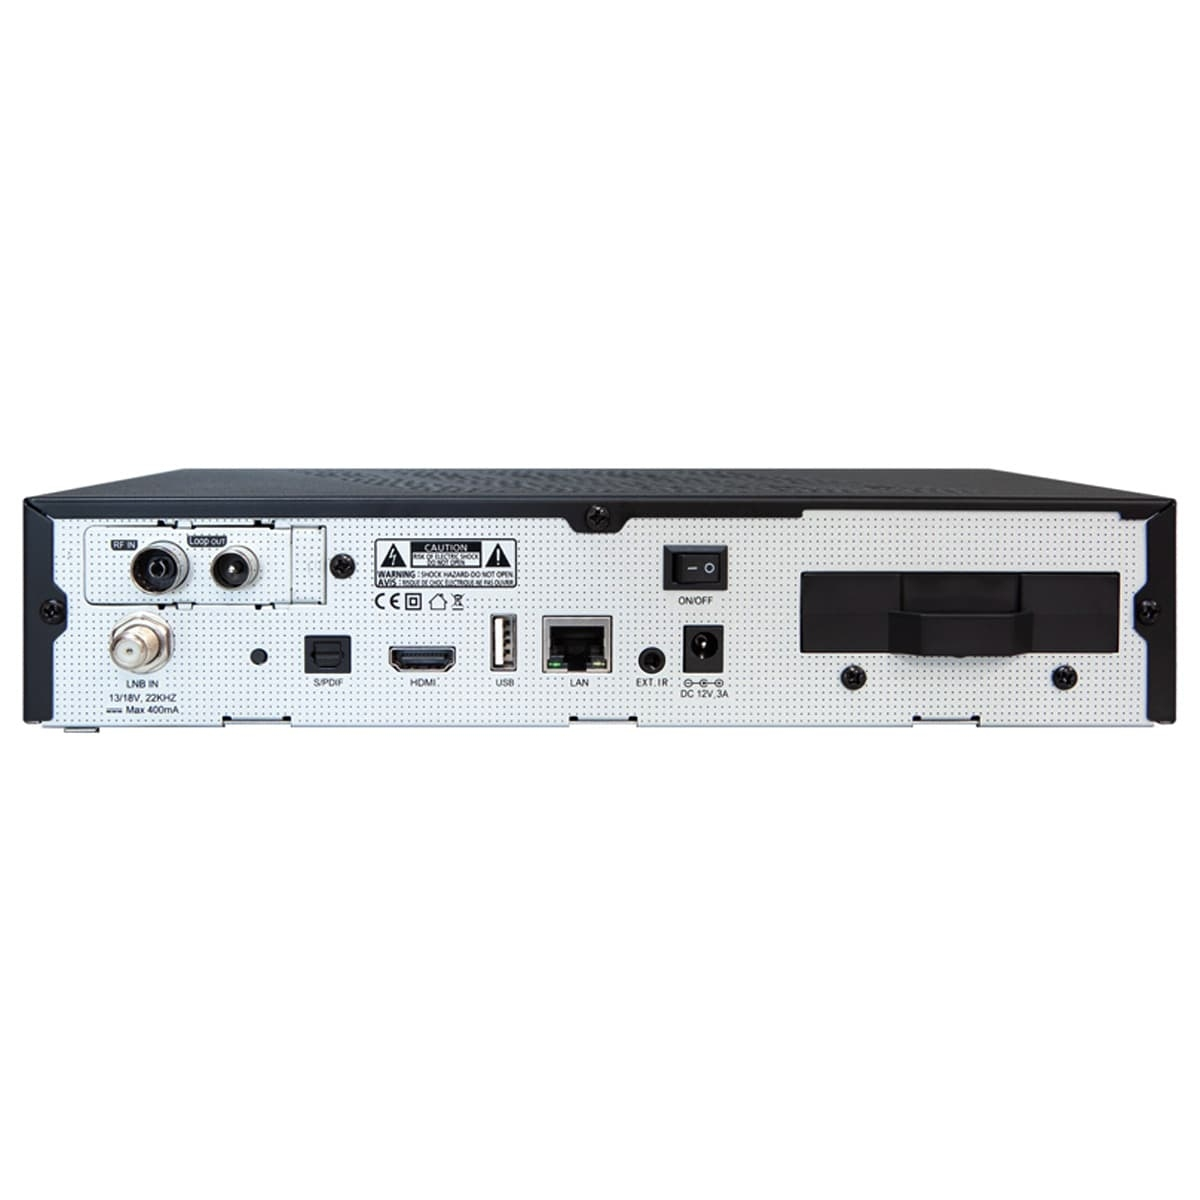 AB-COM Twin Receiver Schwarz) DVB-C/T2 Sat DVB-S2X 4K PULSe 64GB (PVR-Funktion, Tuner, Combo